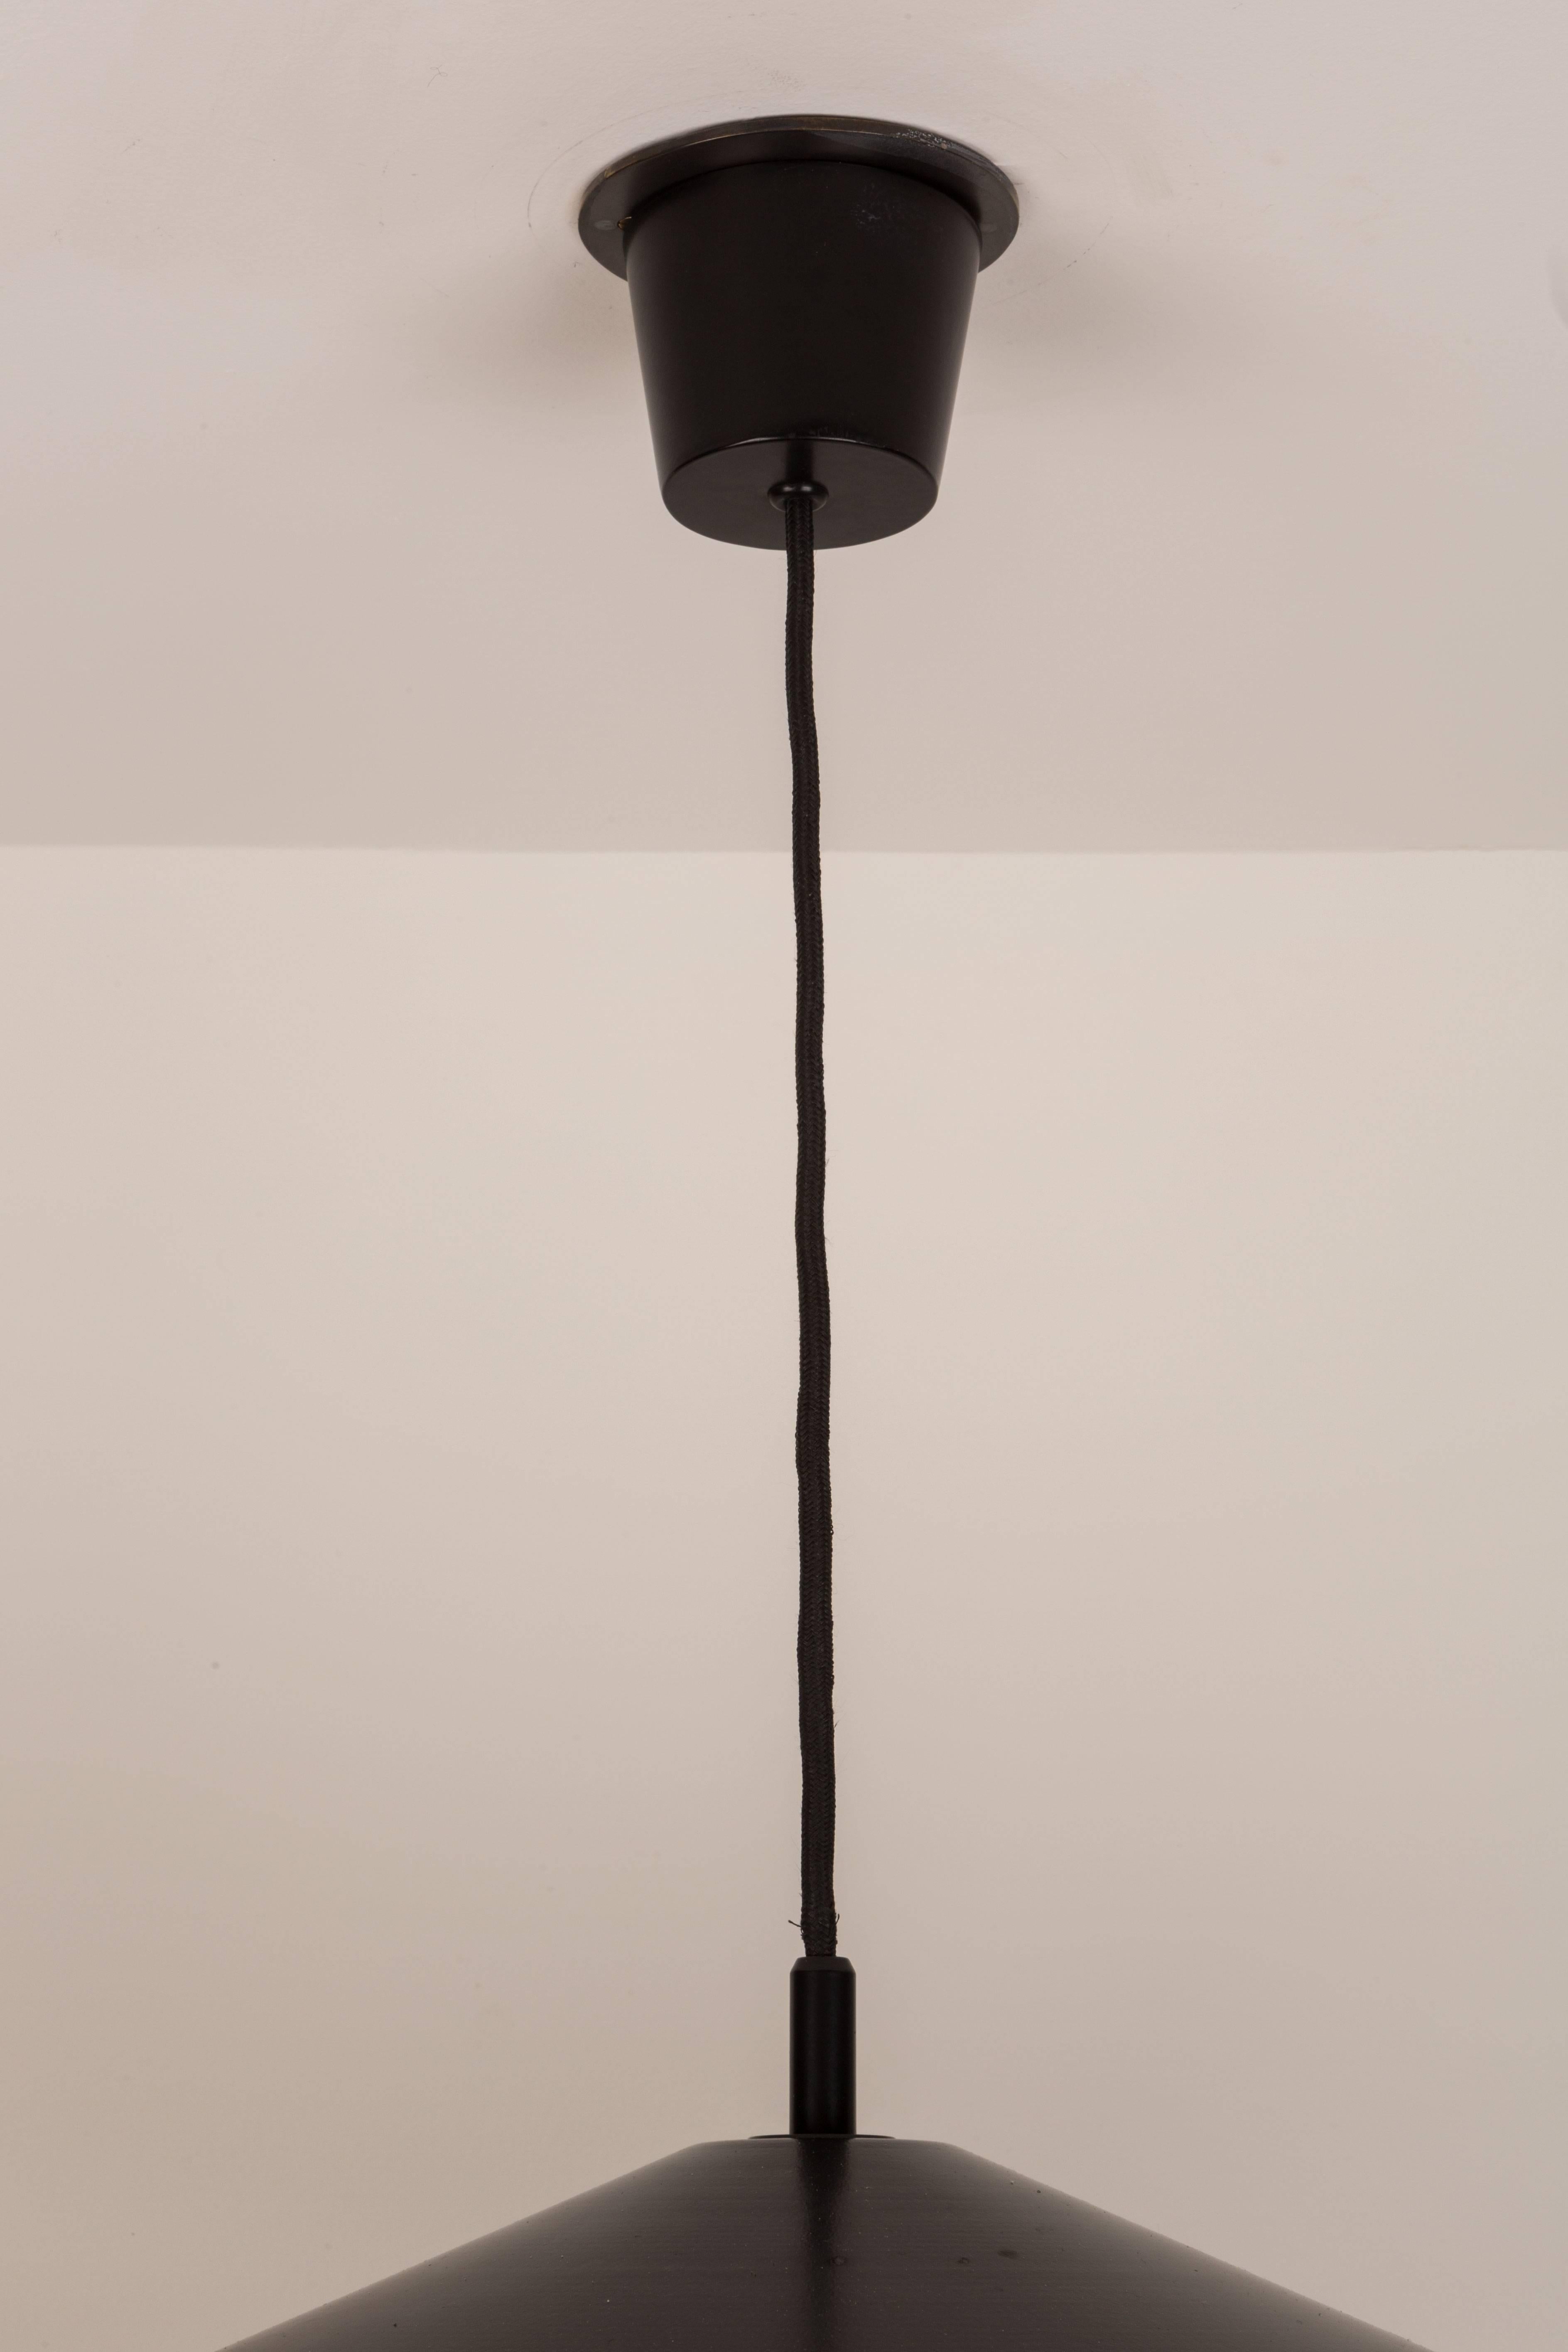 Late 20th Century Akaari Pendant Light by Vico Magistretti for Oluce